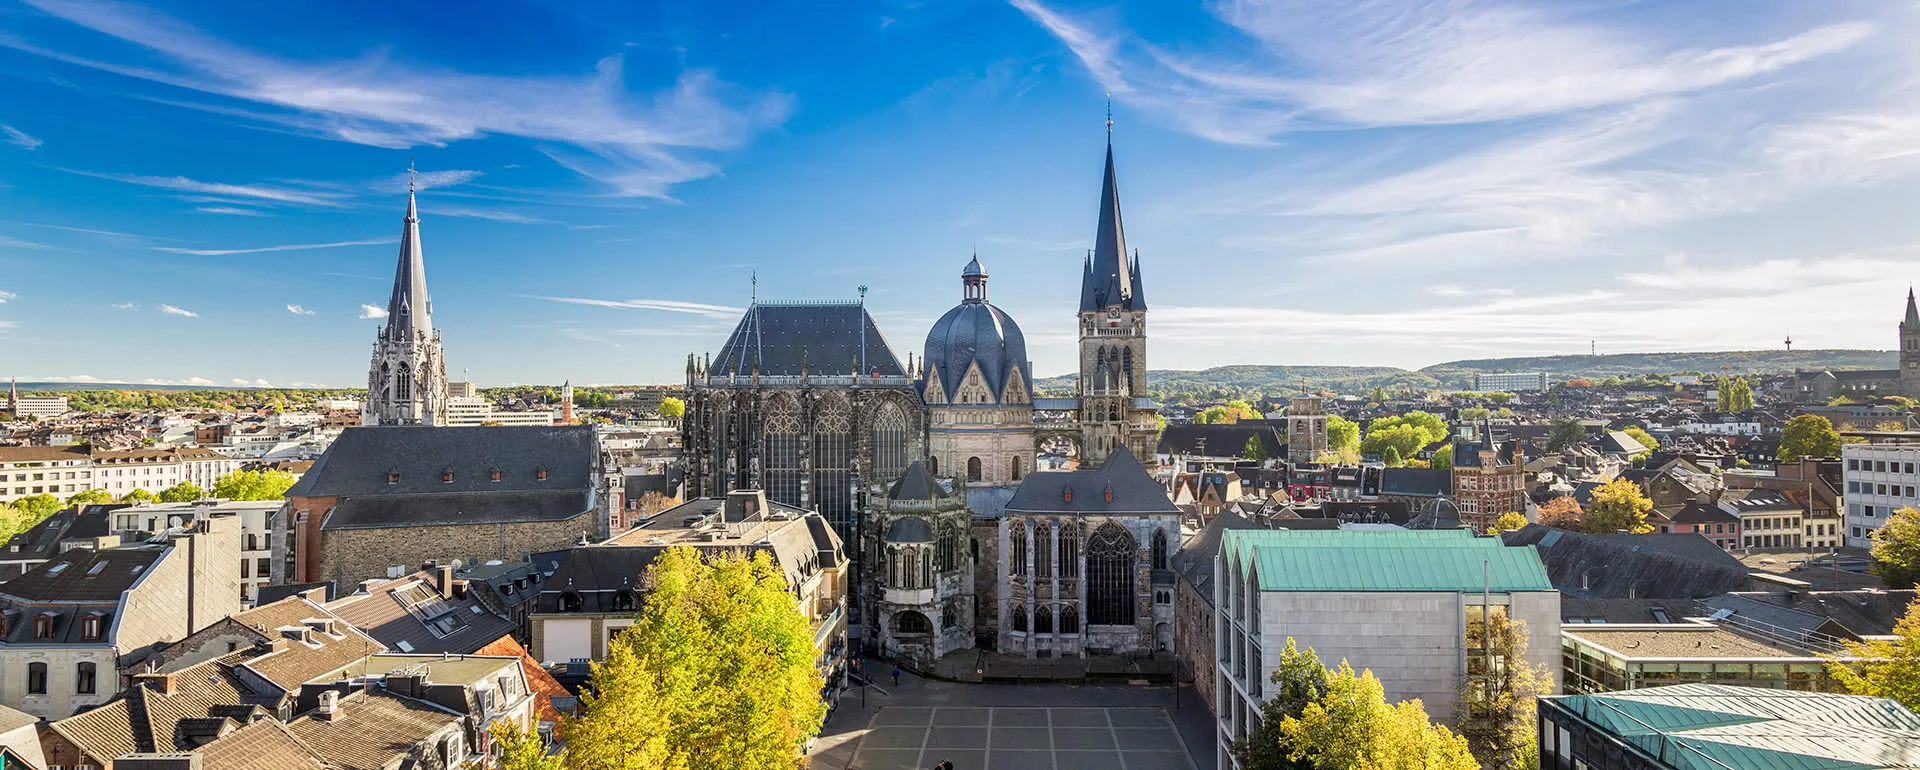 Aachen - the destination for school trips